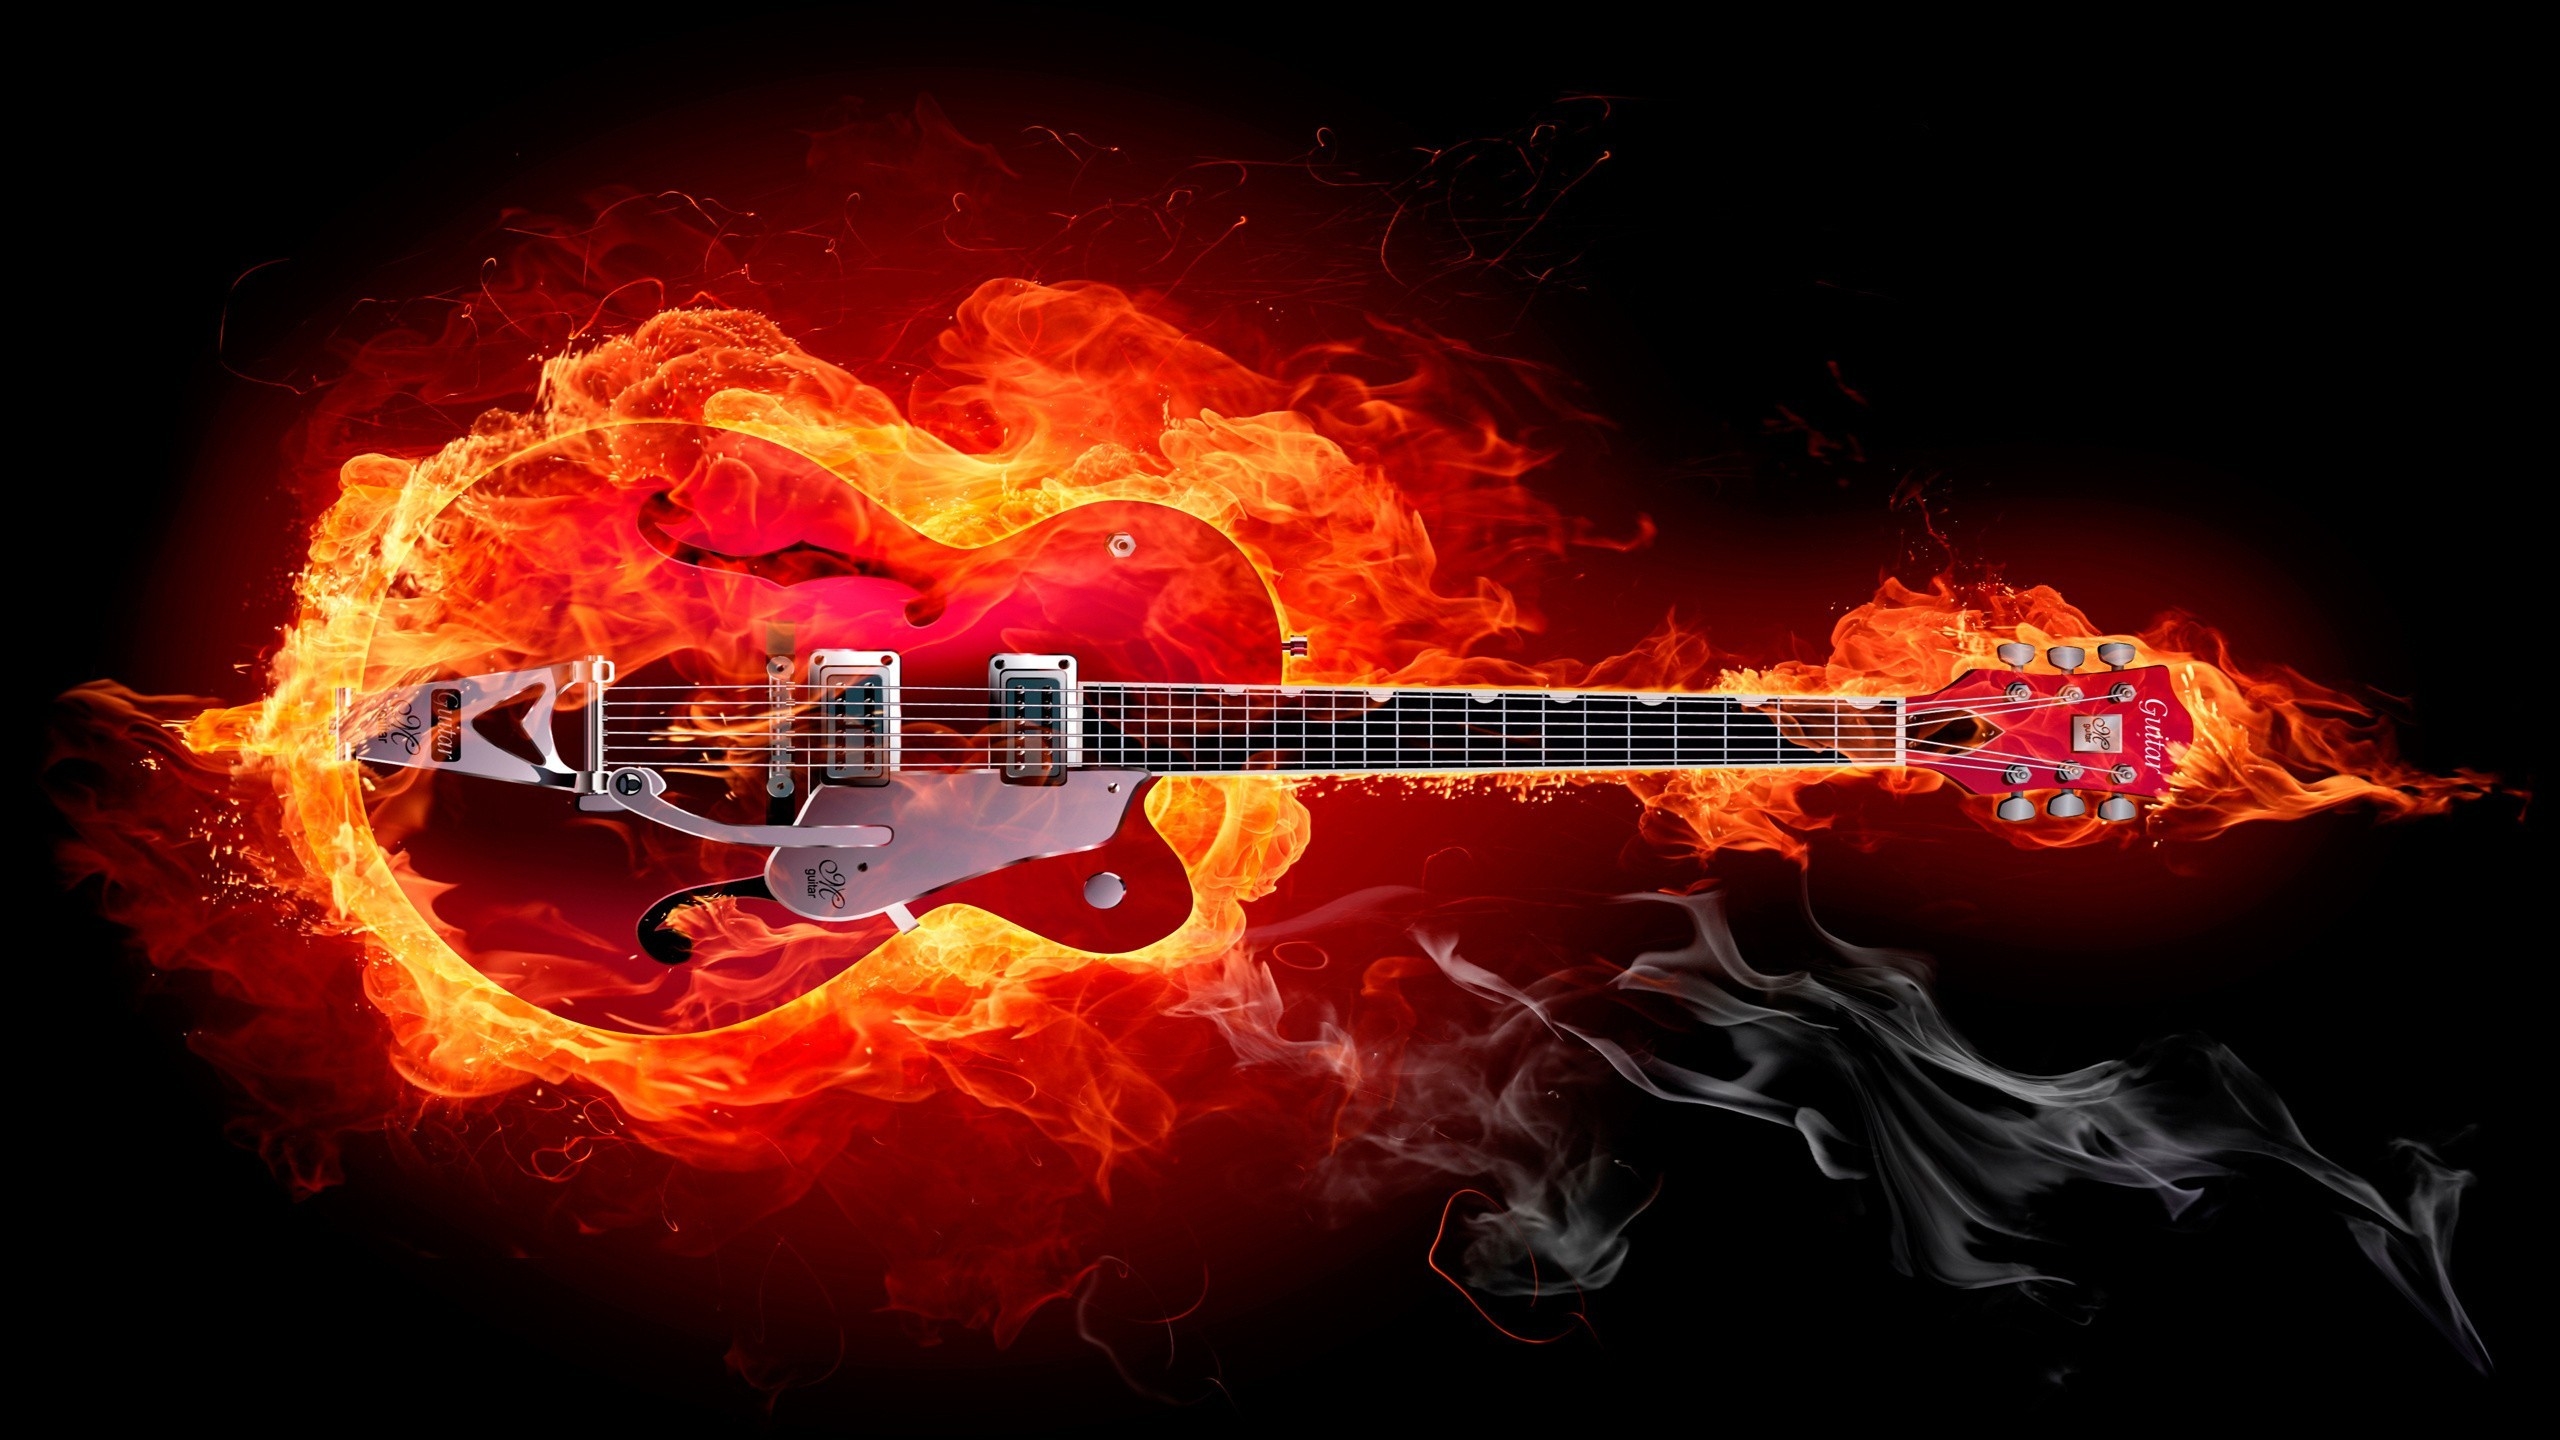 Fire Guitar for 2560x1440 HDTV resolution